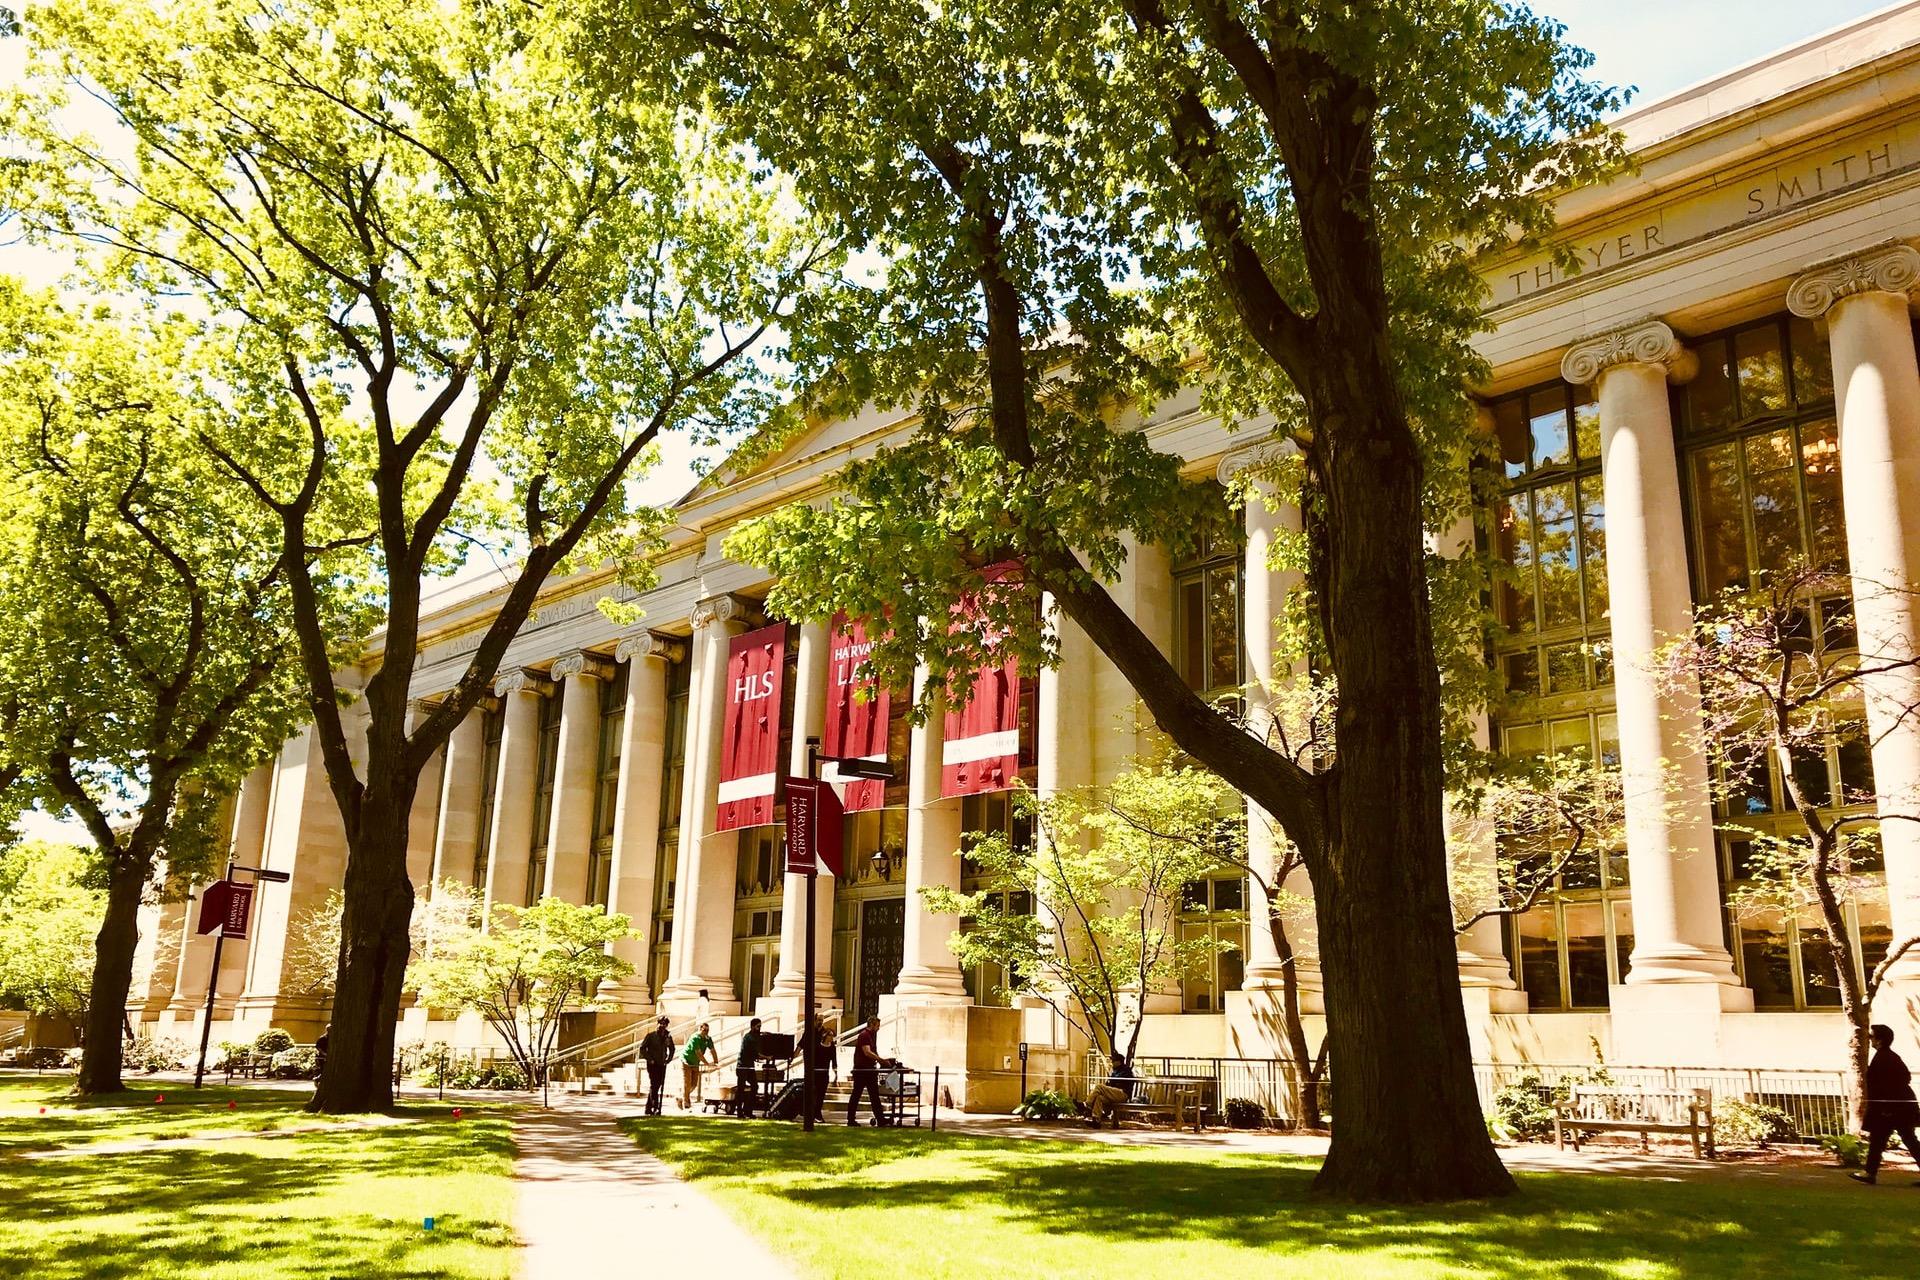 Harvard University image